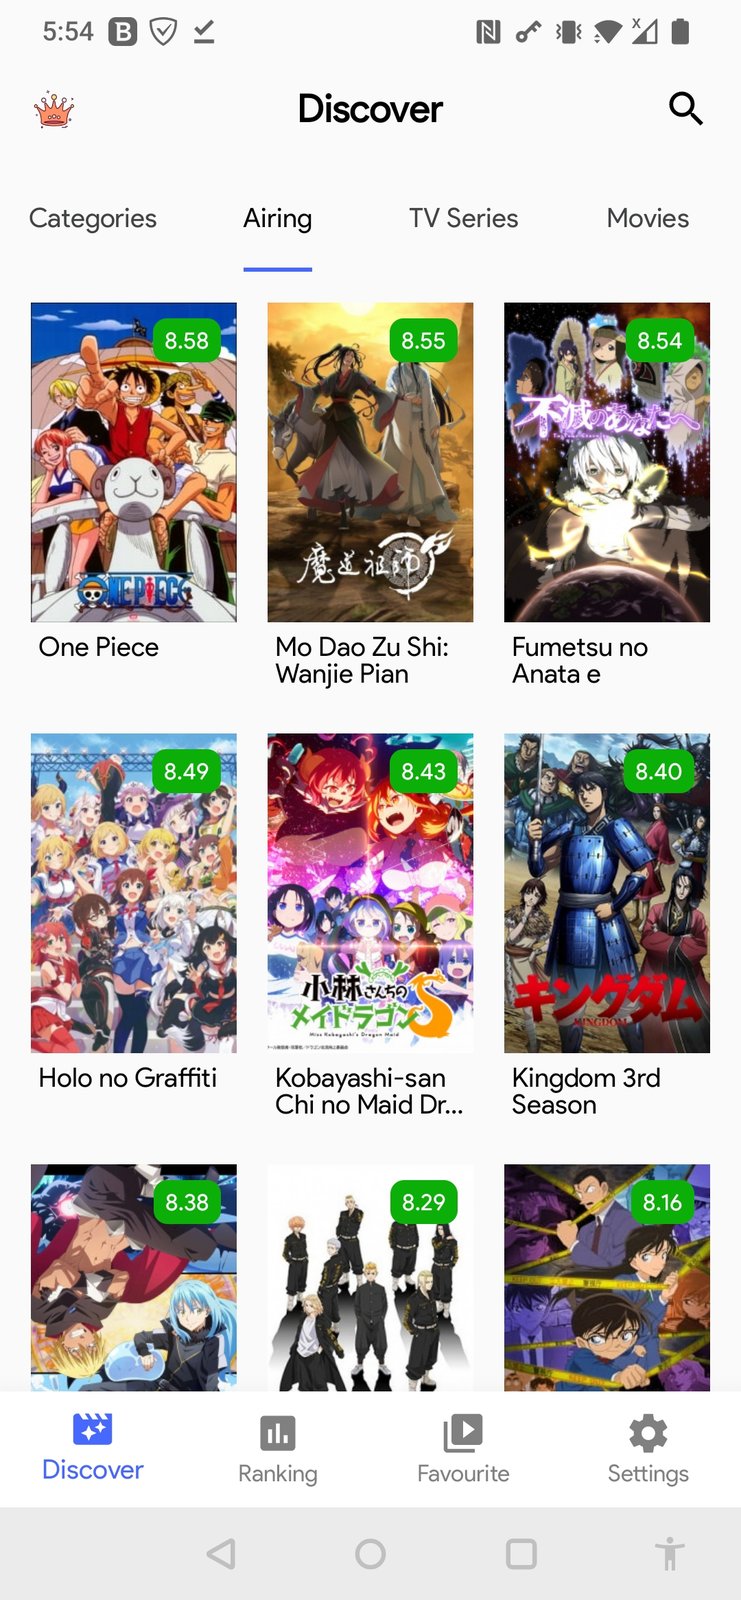 Anime Online MOD APK v1.0.1 (Ad-Free Version)